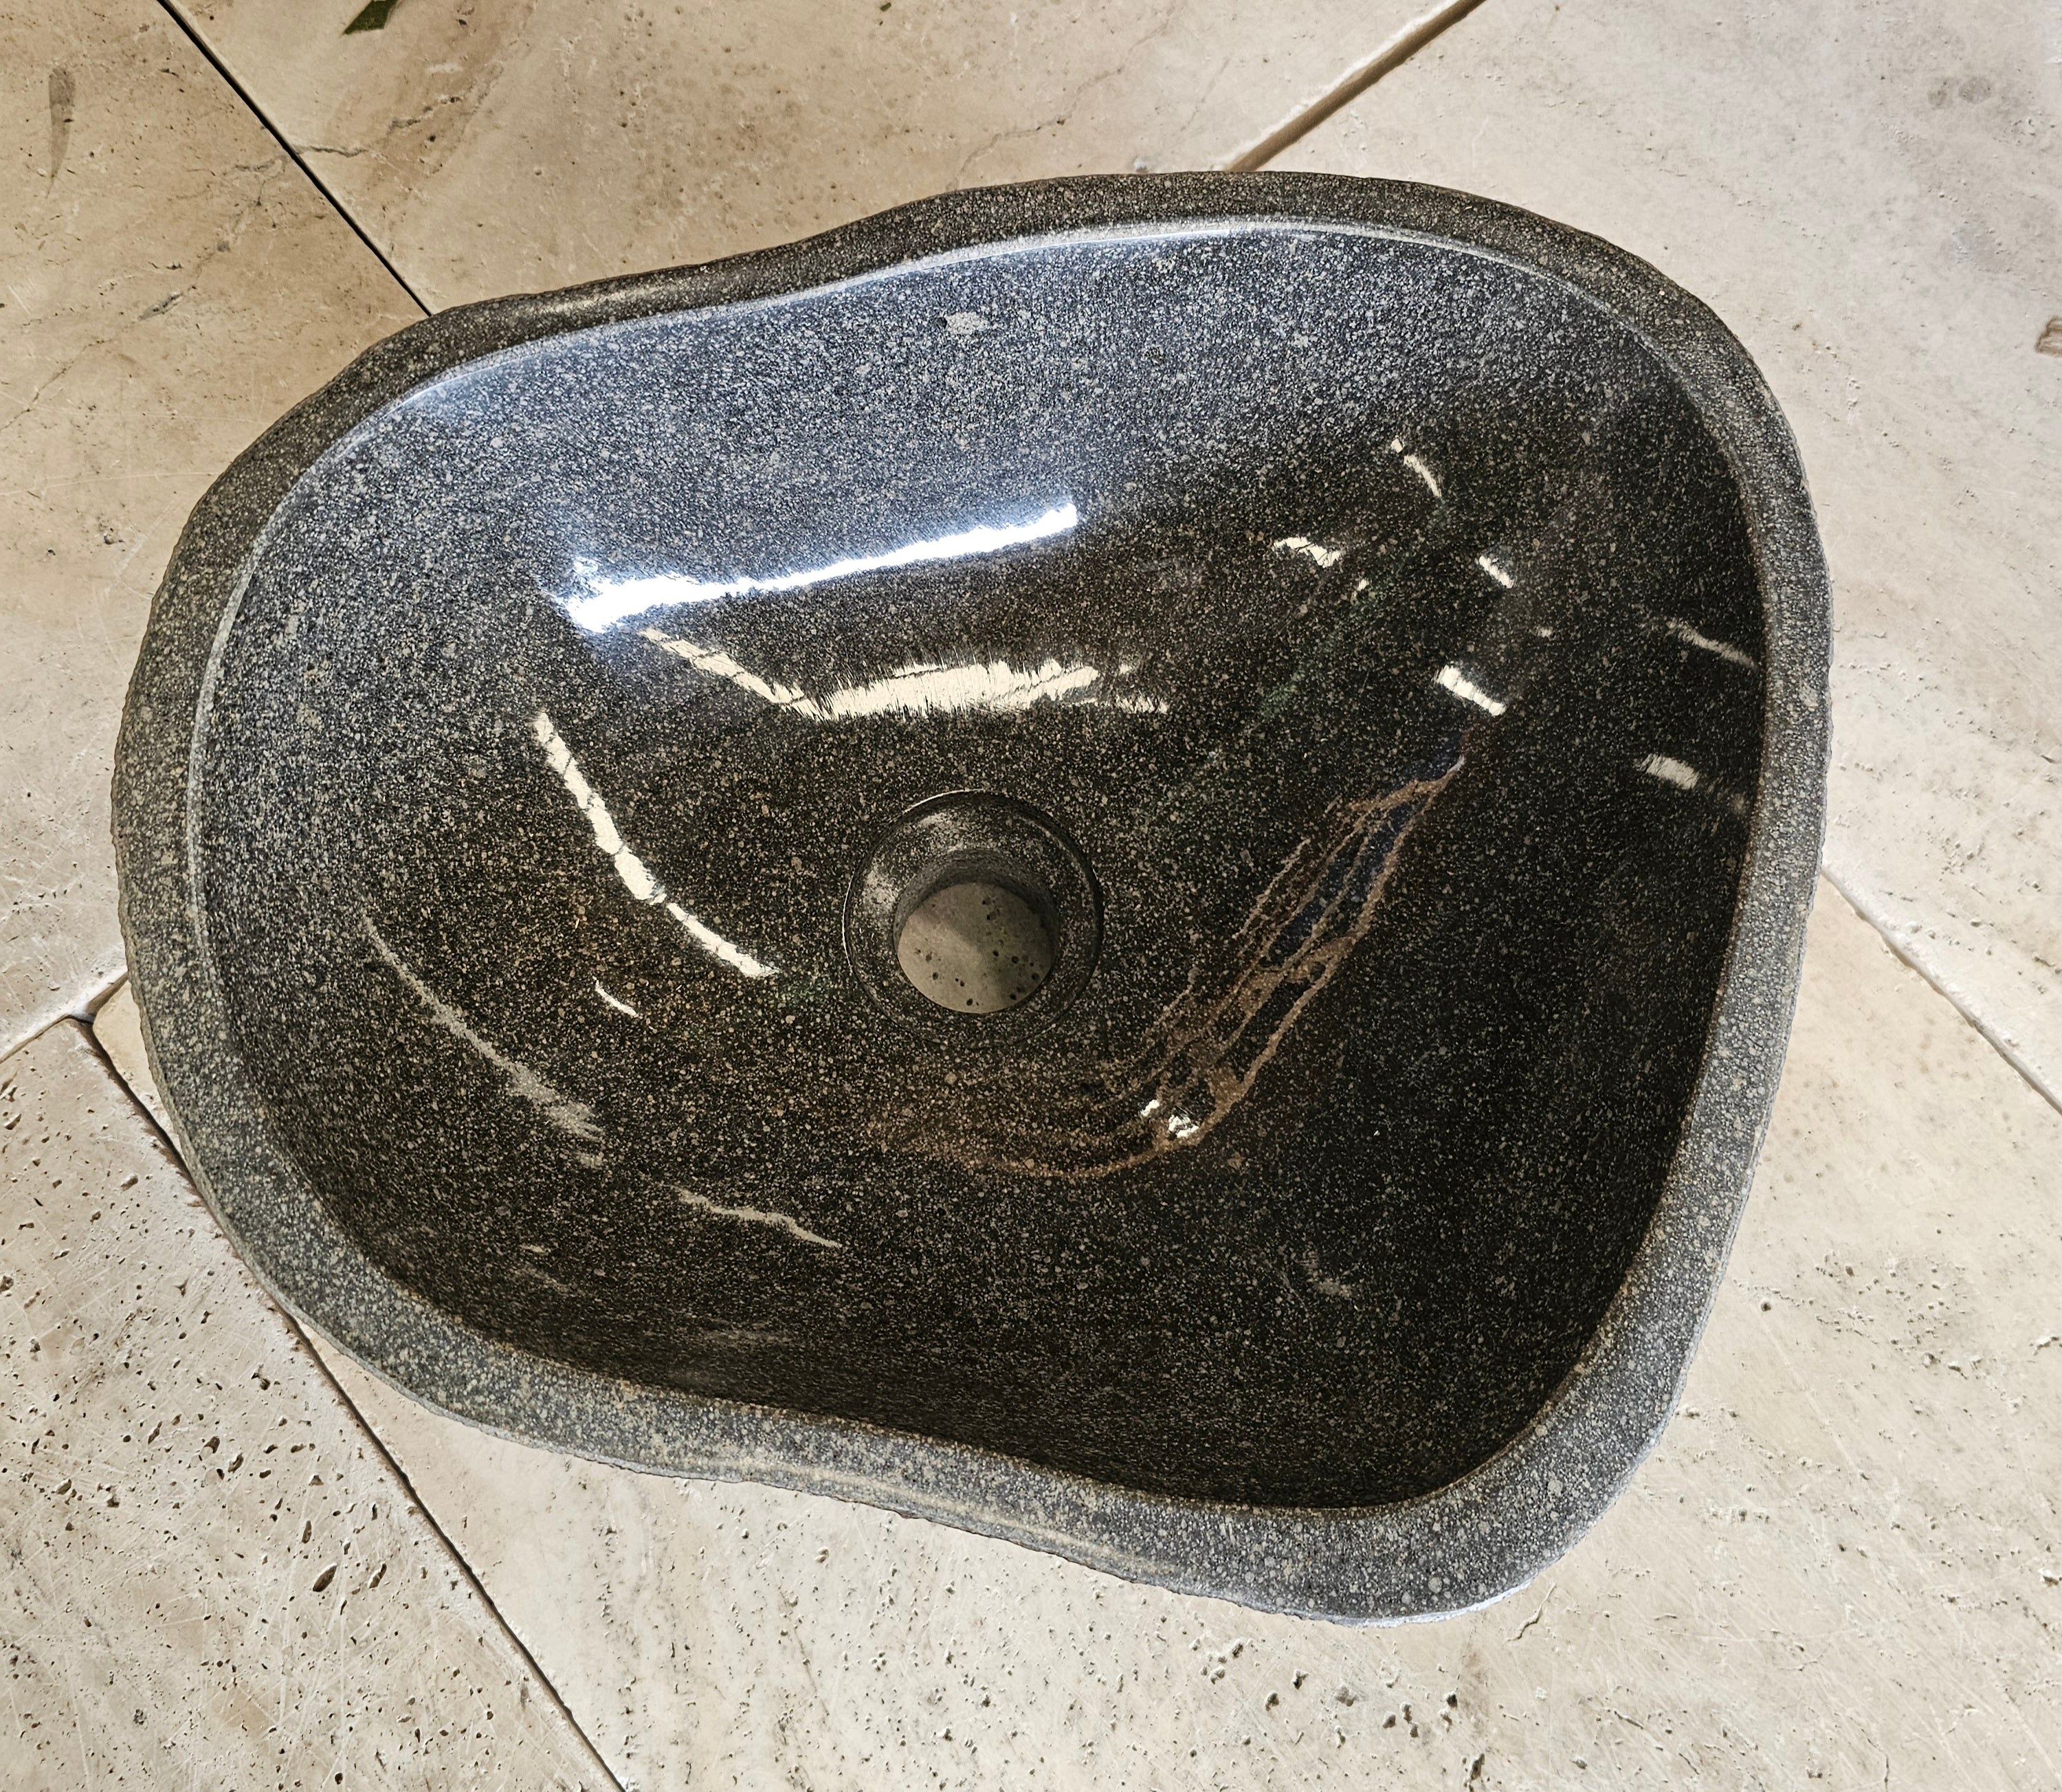 Handmade Natural Oval River Stone Bathroom Basin - RS2306088